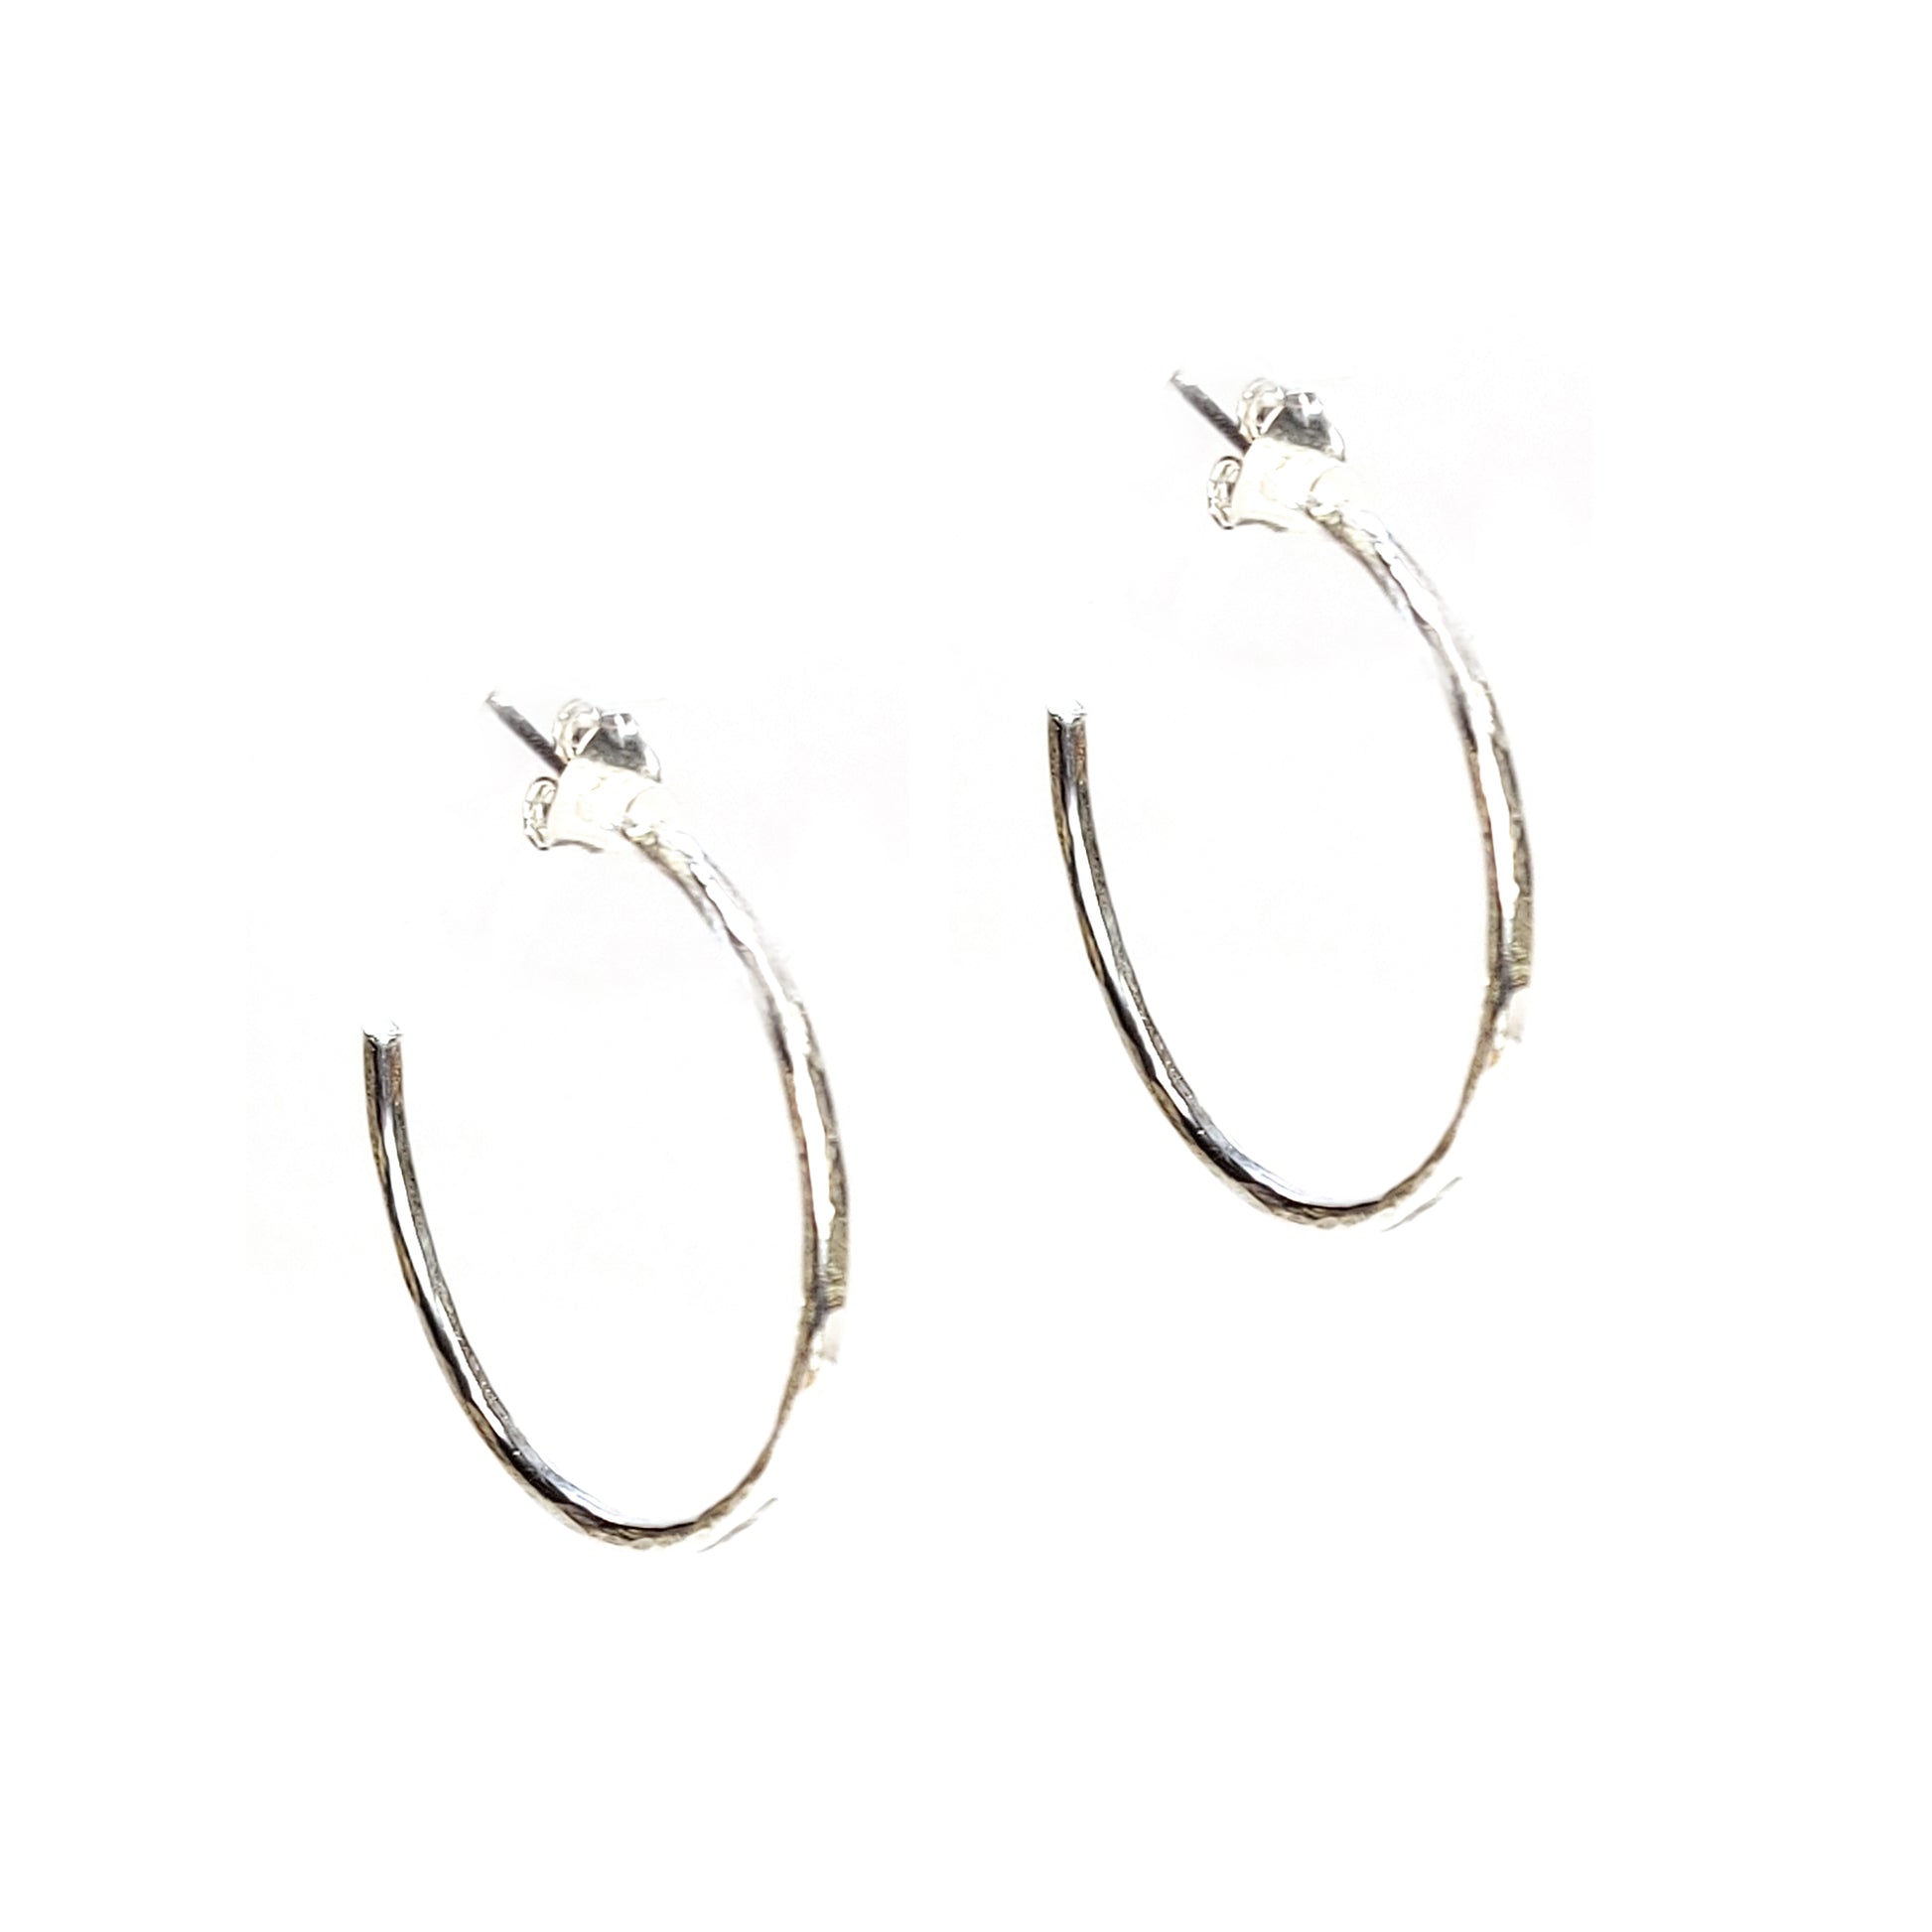 Silver thin hammered hoop earrings - large.